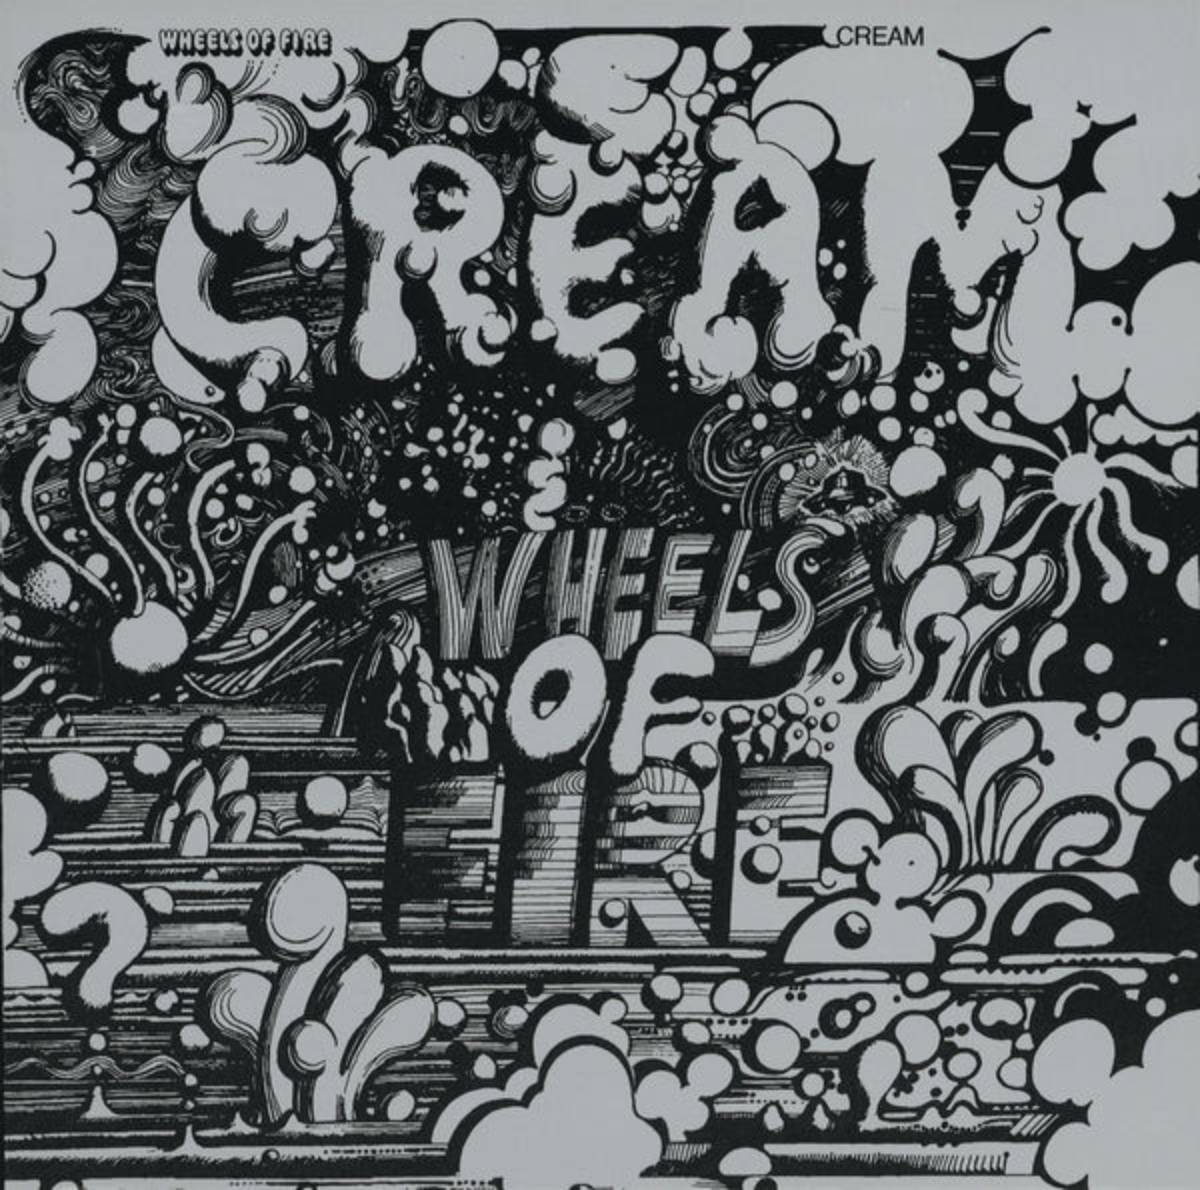 Cream - Rodas de Fogo (1968)